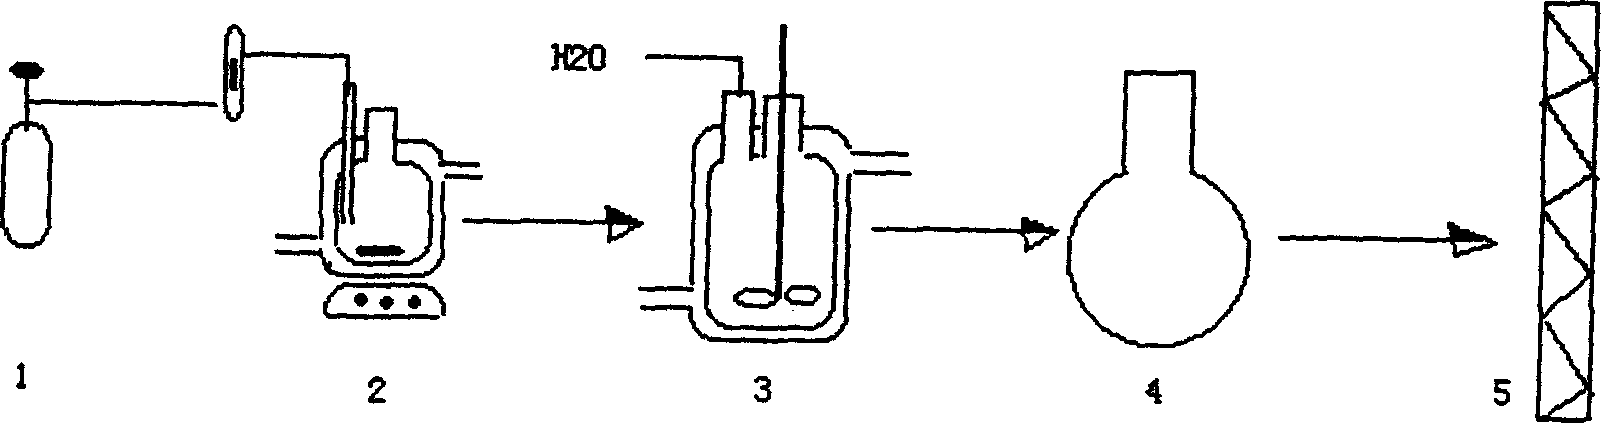 Process for preparing beta-phenylethanol